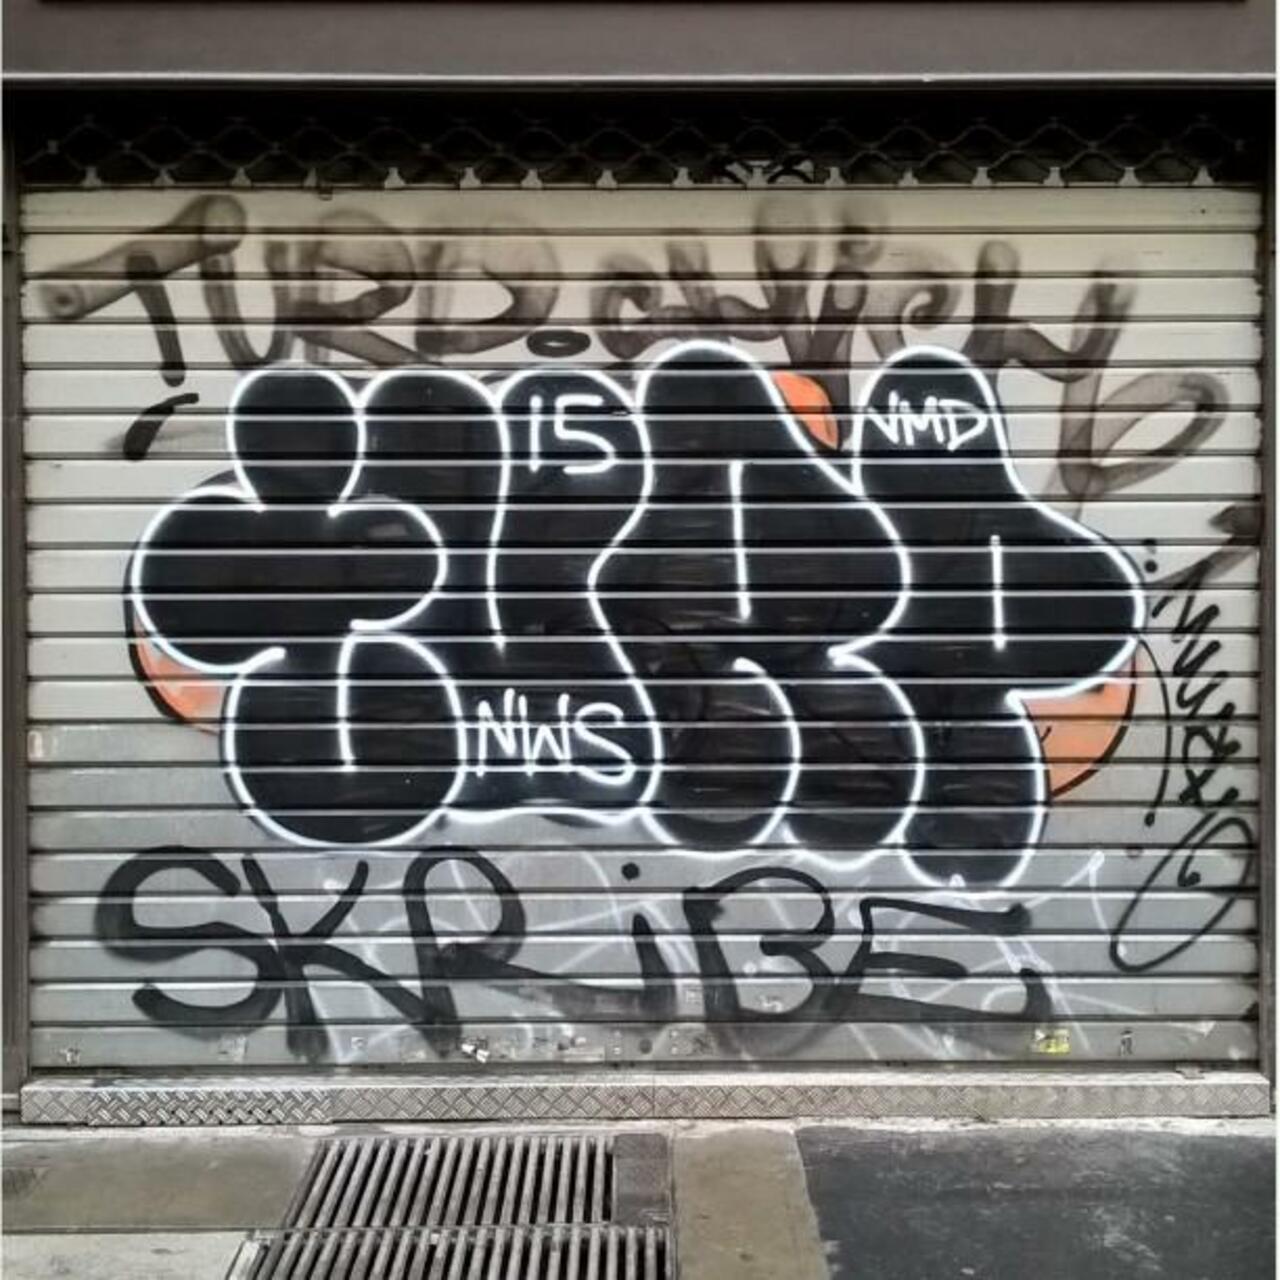 #Paris #graffiti photo by @maxdimontemarciano http://ift.tt/1RgAijt #StreetArt http://t.co/2bk8UU0msf